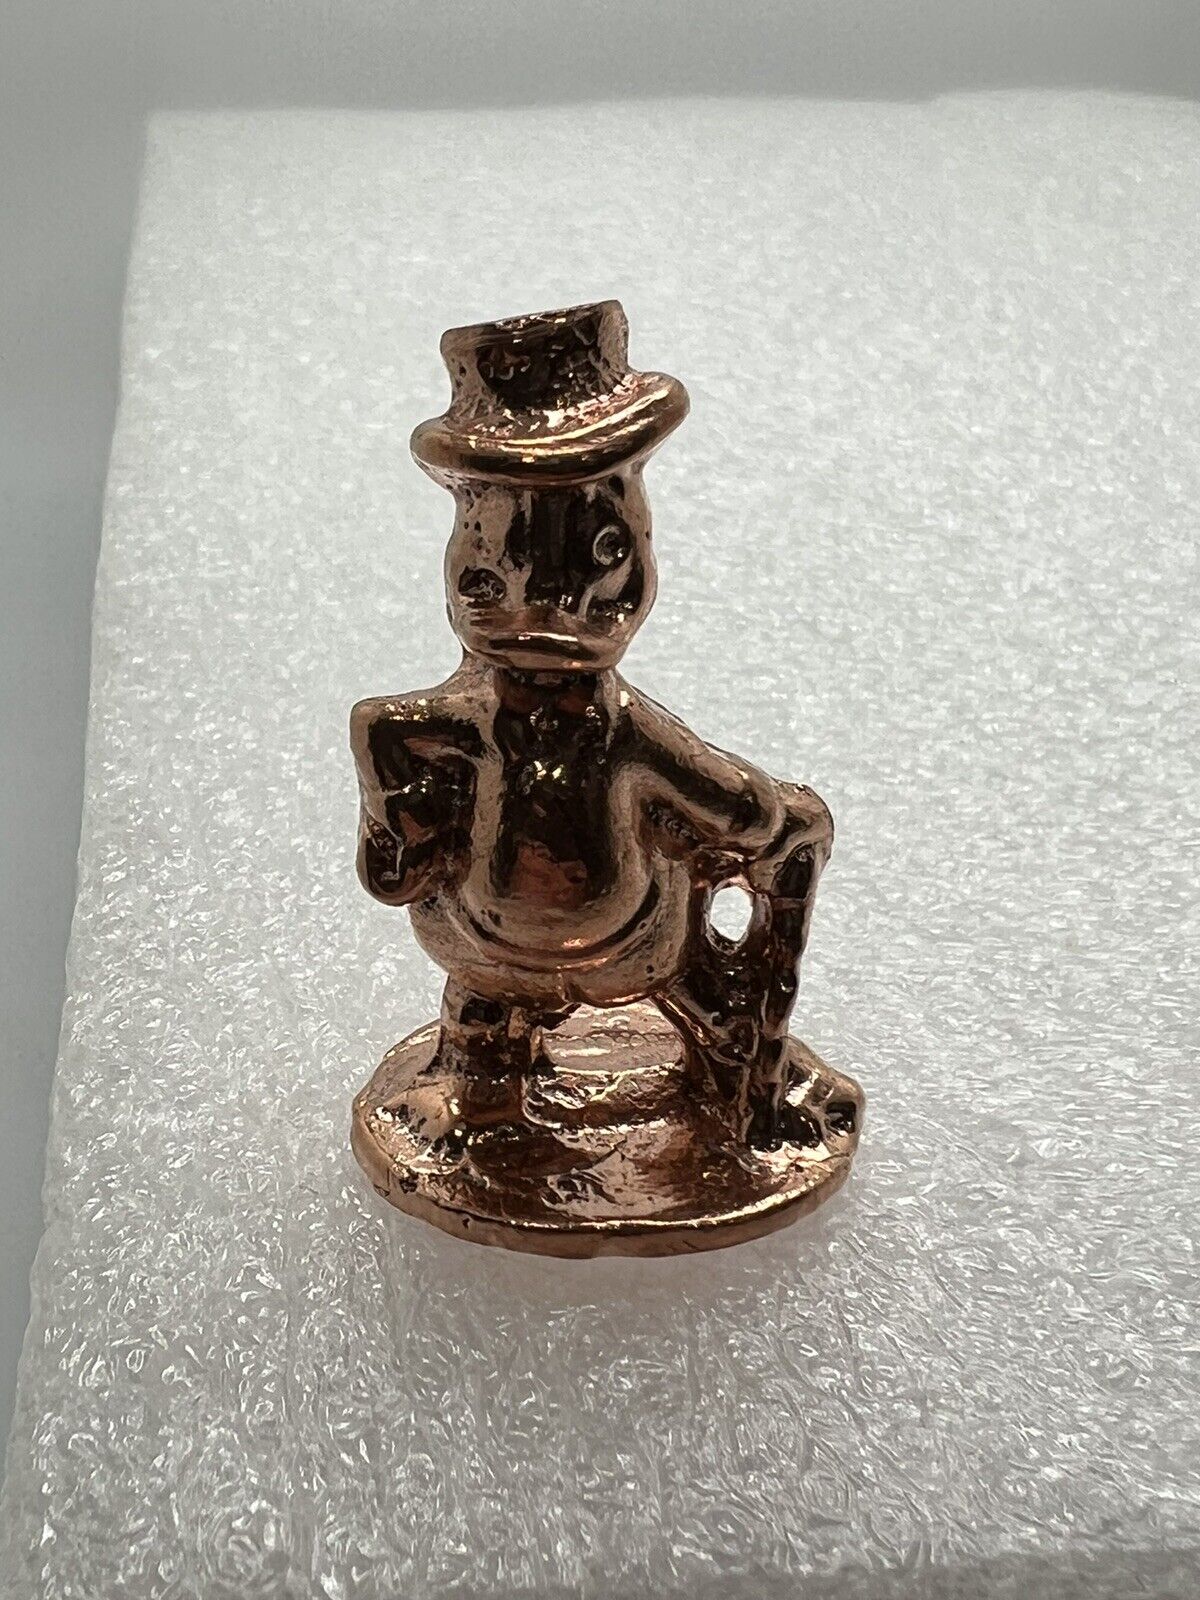 20+- Gram .999 Copper Pour Scrooge Mcduck Figurine Unique Rare Collector Piece